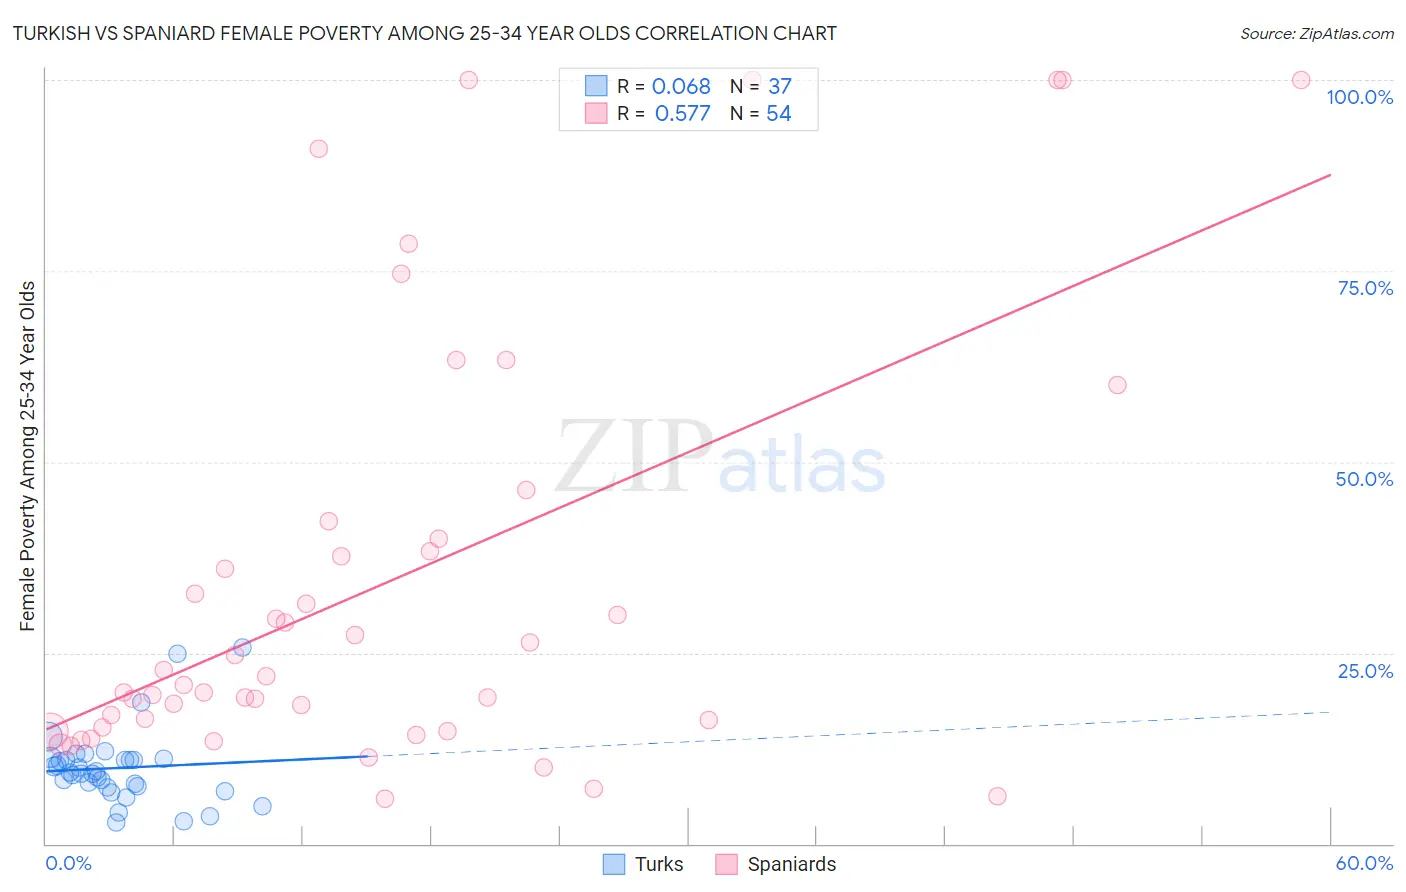 Turkish vs Spaniard Female Poverty Among 25-34 Year Olds